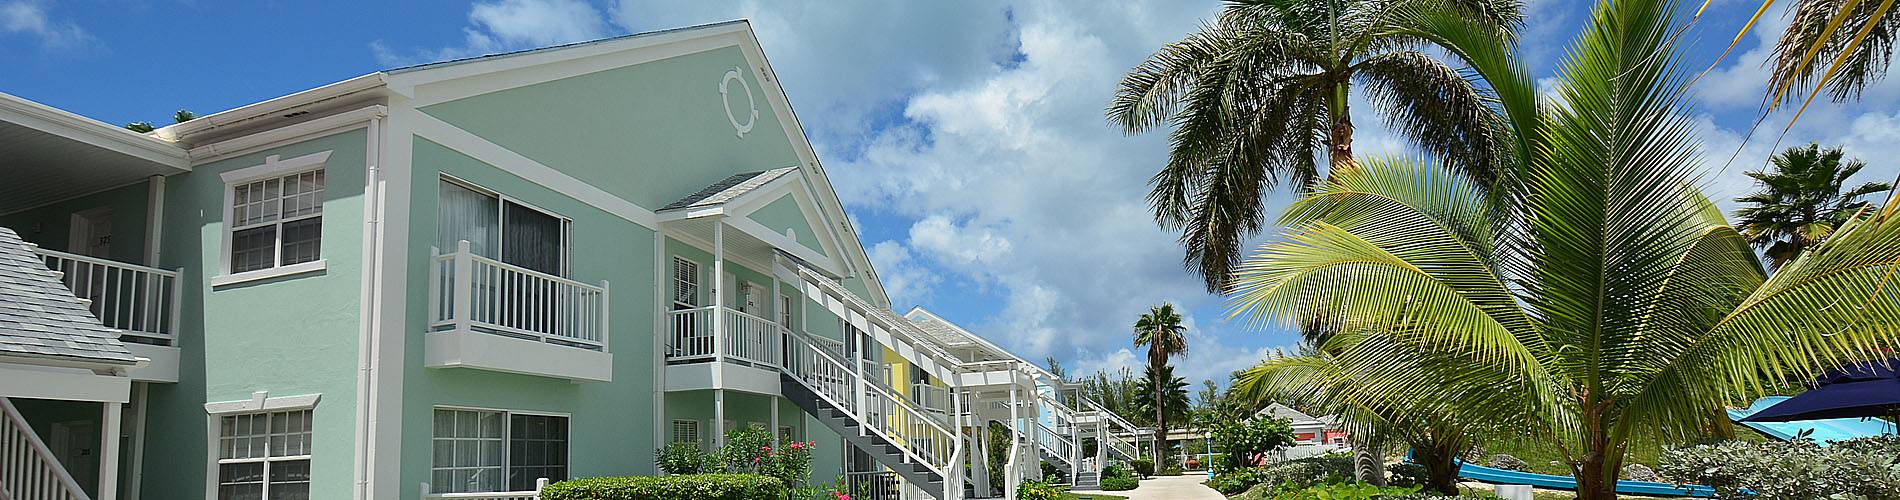 Stuart Coves Bahamas Hotels 10